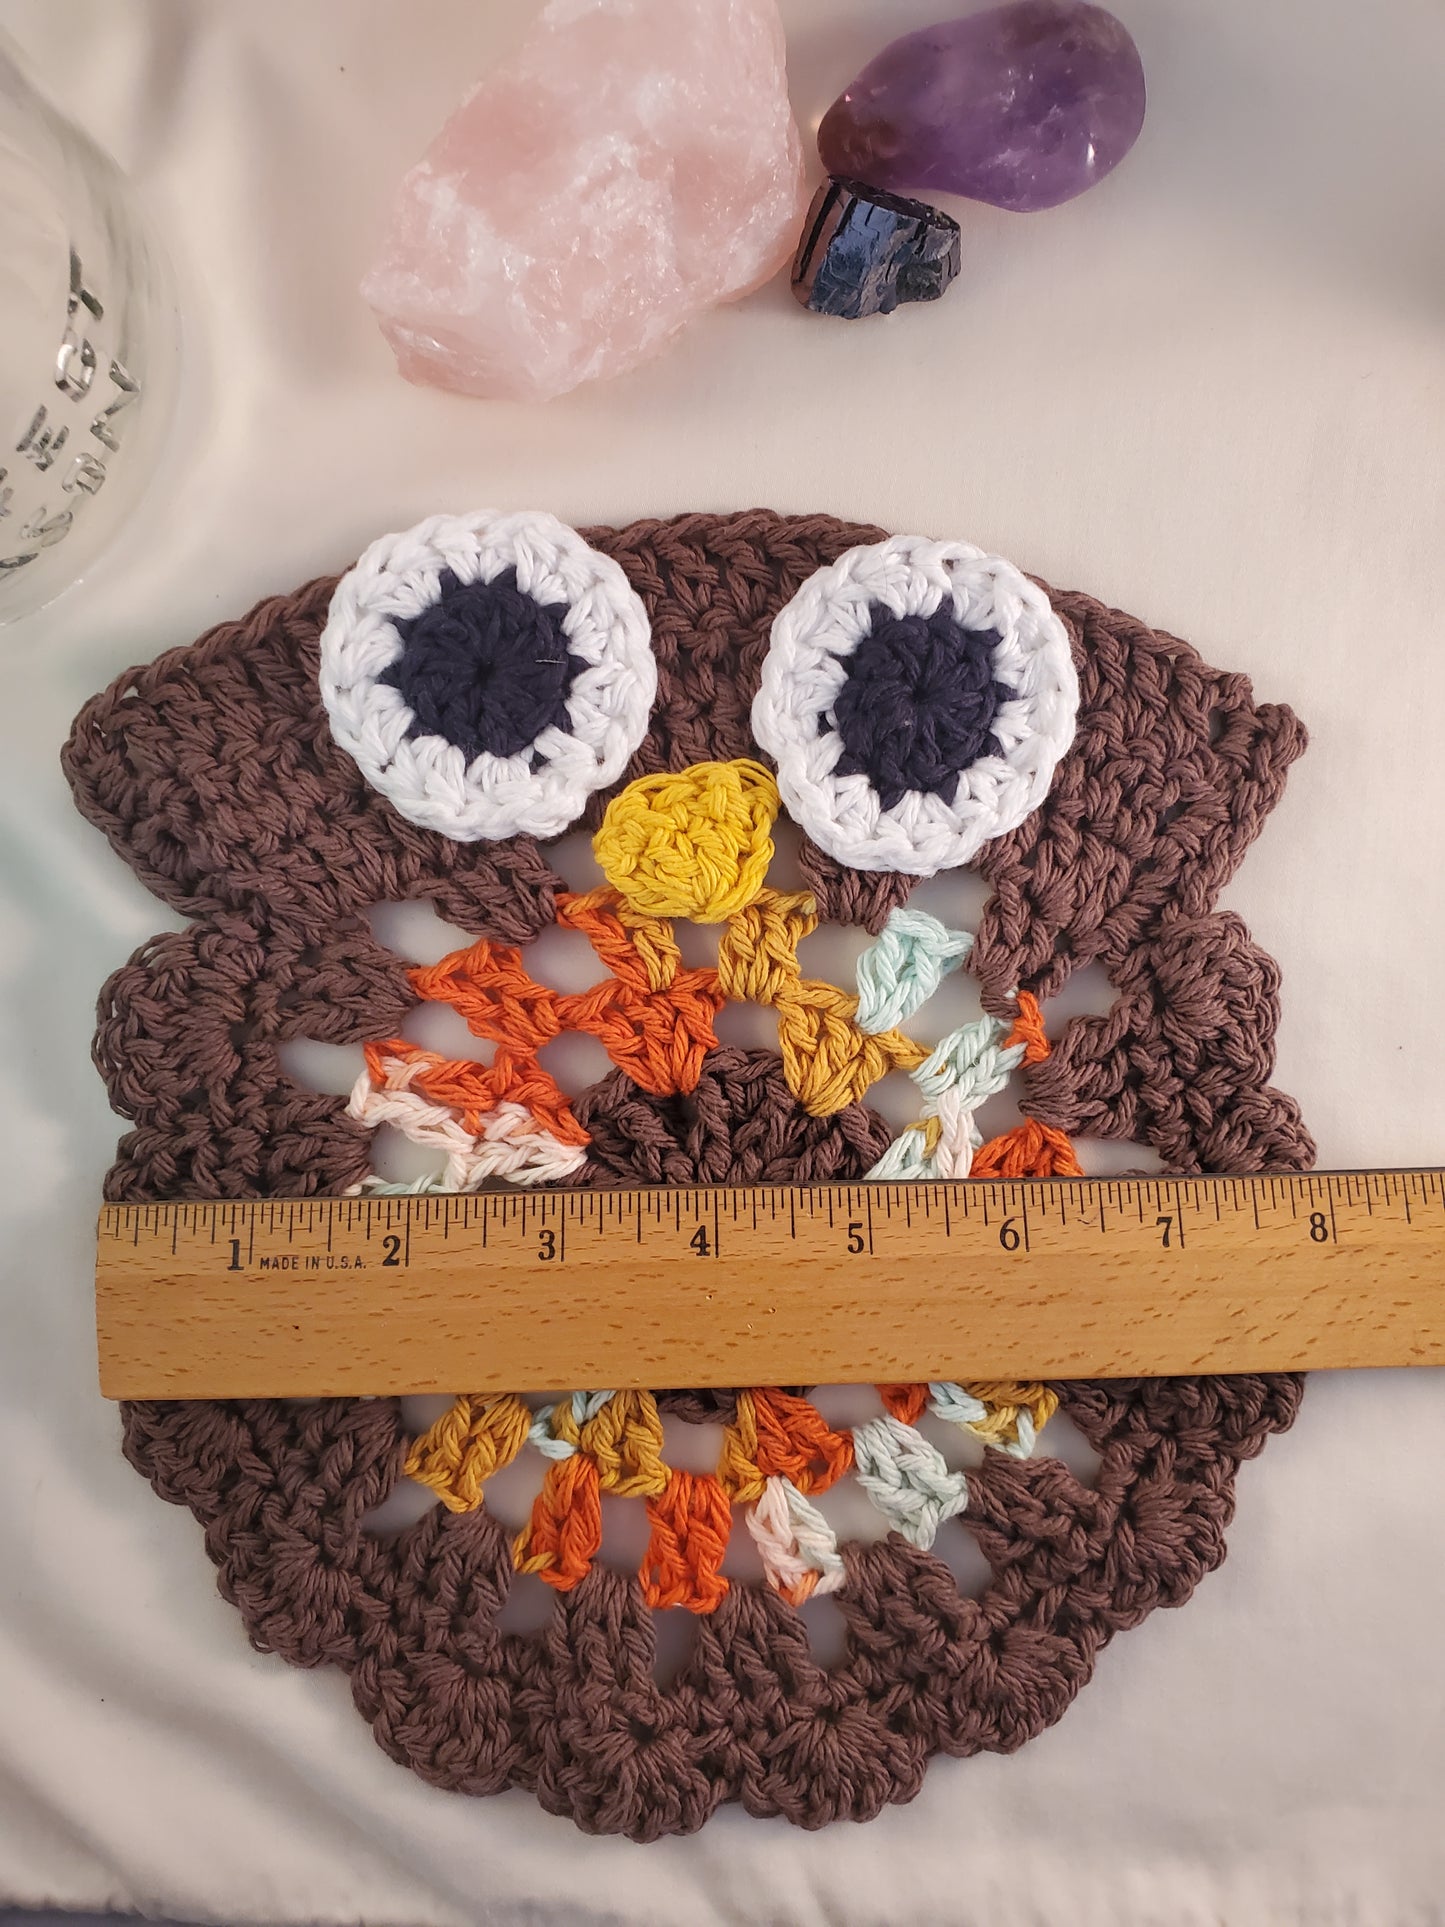 Handmade Owl-Shaped Crochet Hot Pad – Cute 70s Inspired Design